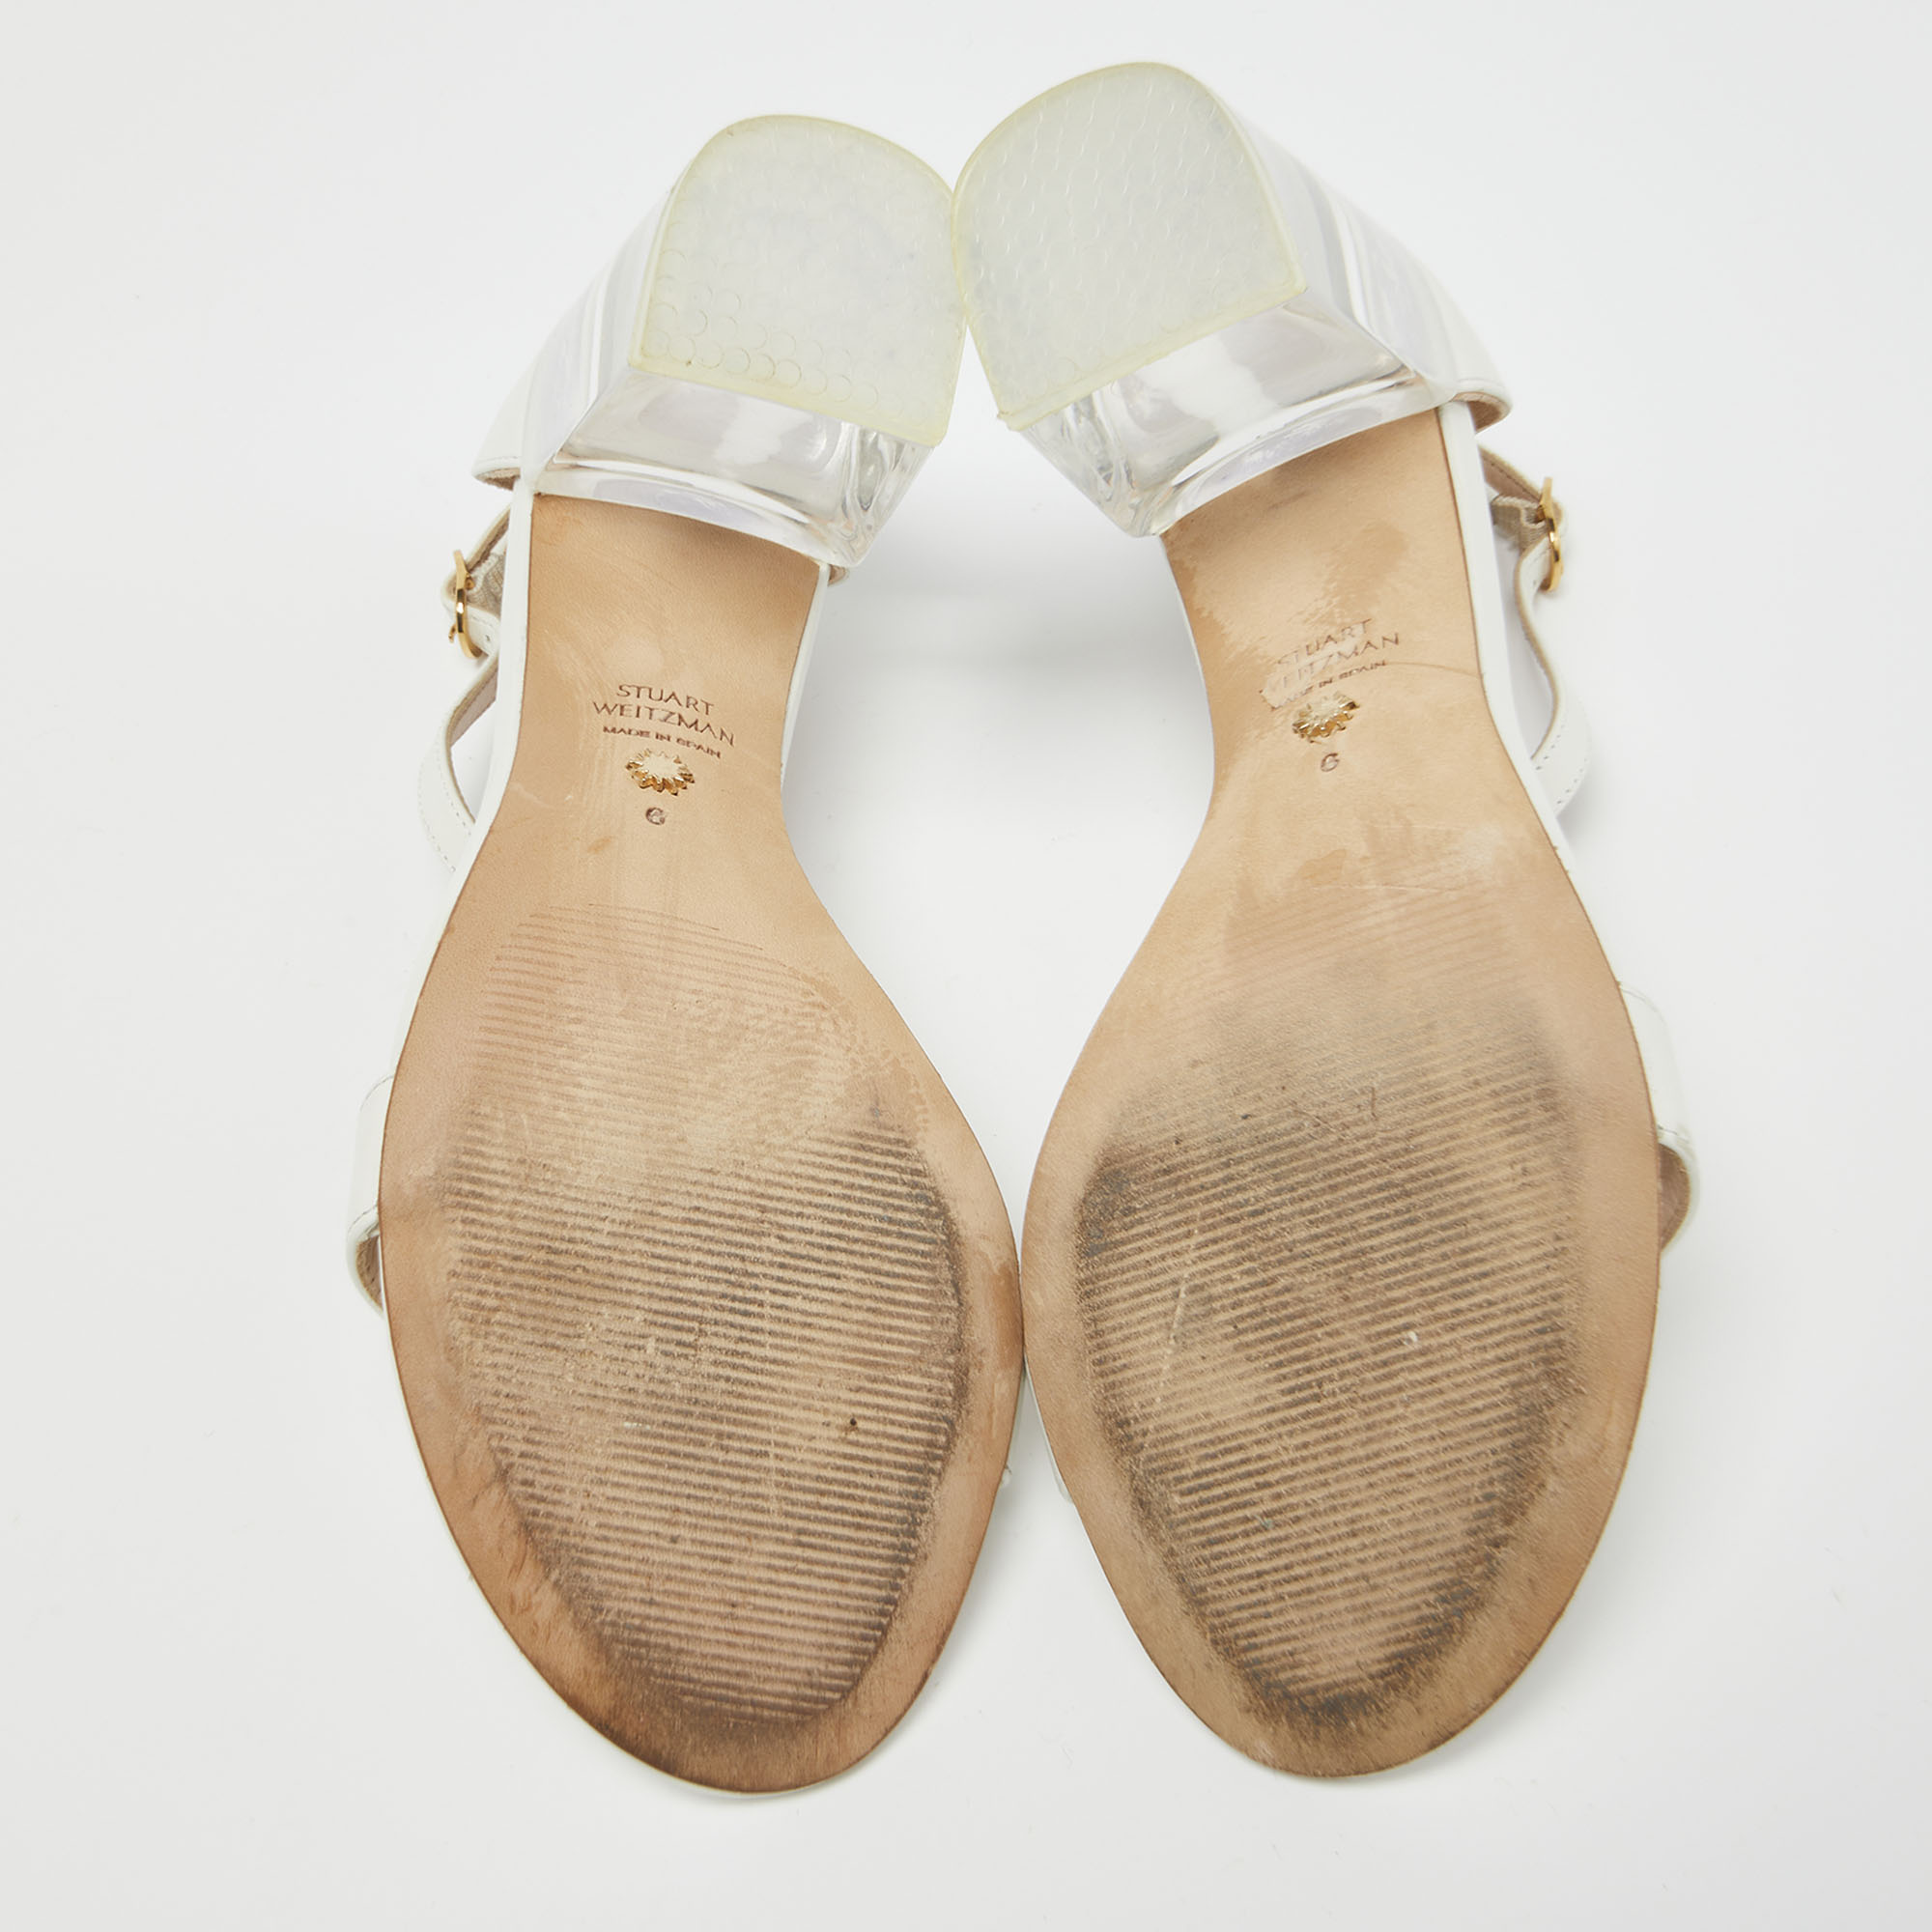 Stuart Weitzman White Leather Ankle Strap Sandals Size 36.5